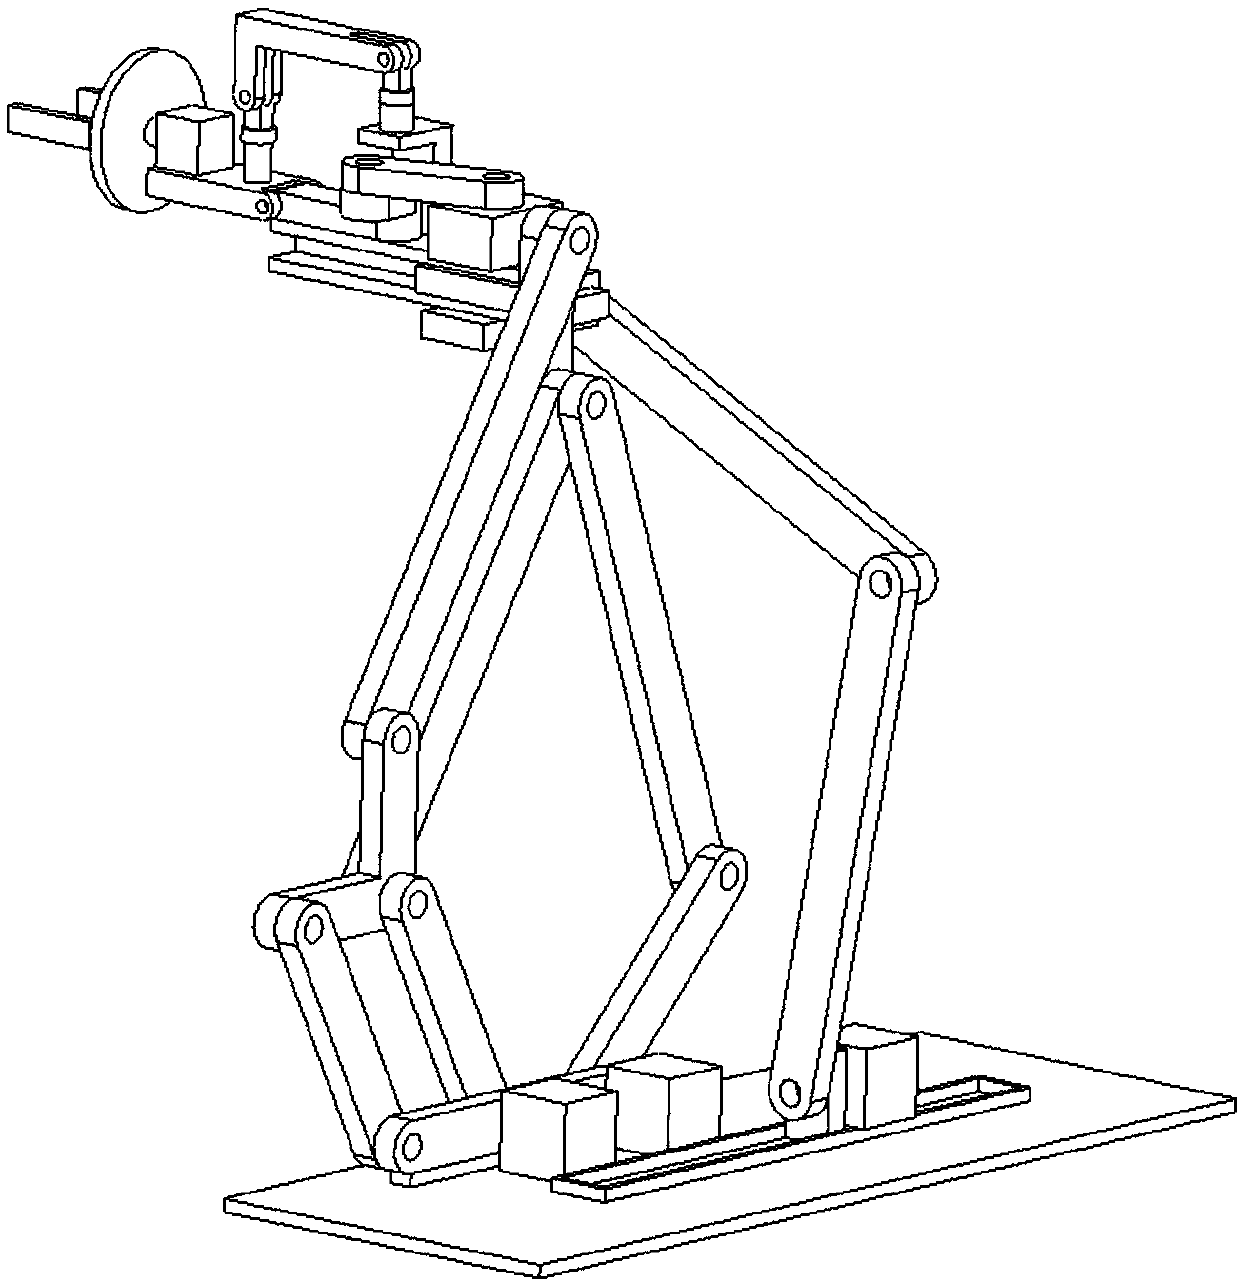 Full-degree-of-spatial-freedom metamorphic mechanism type palletizing robot mechanism